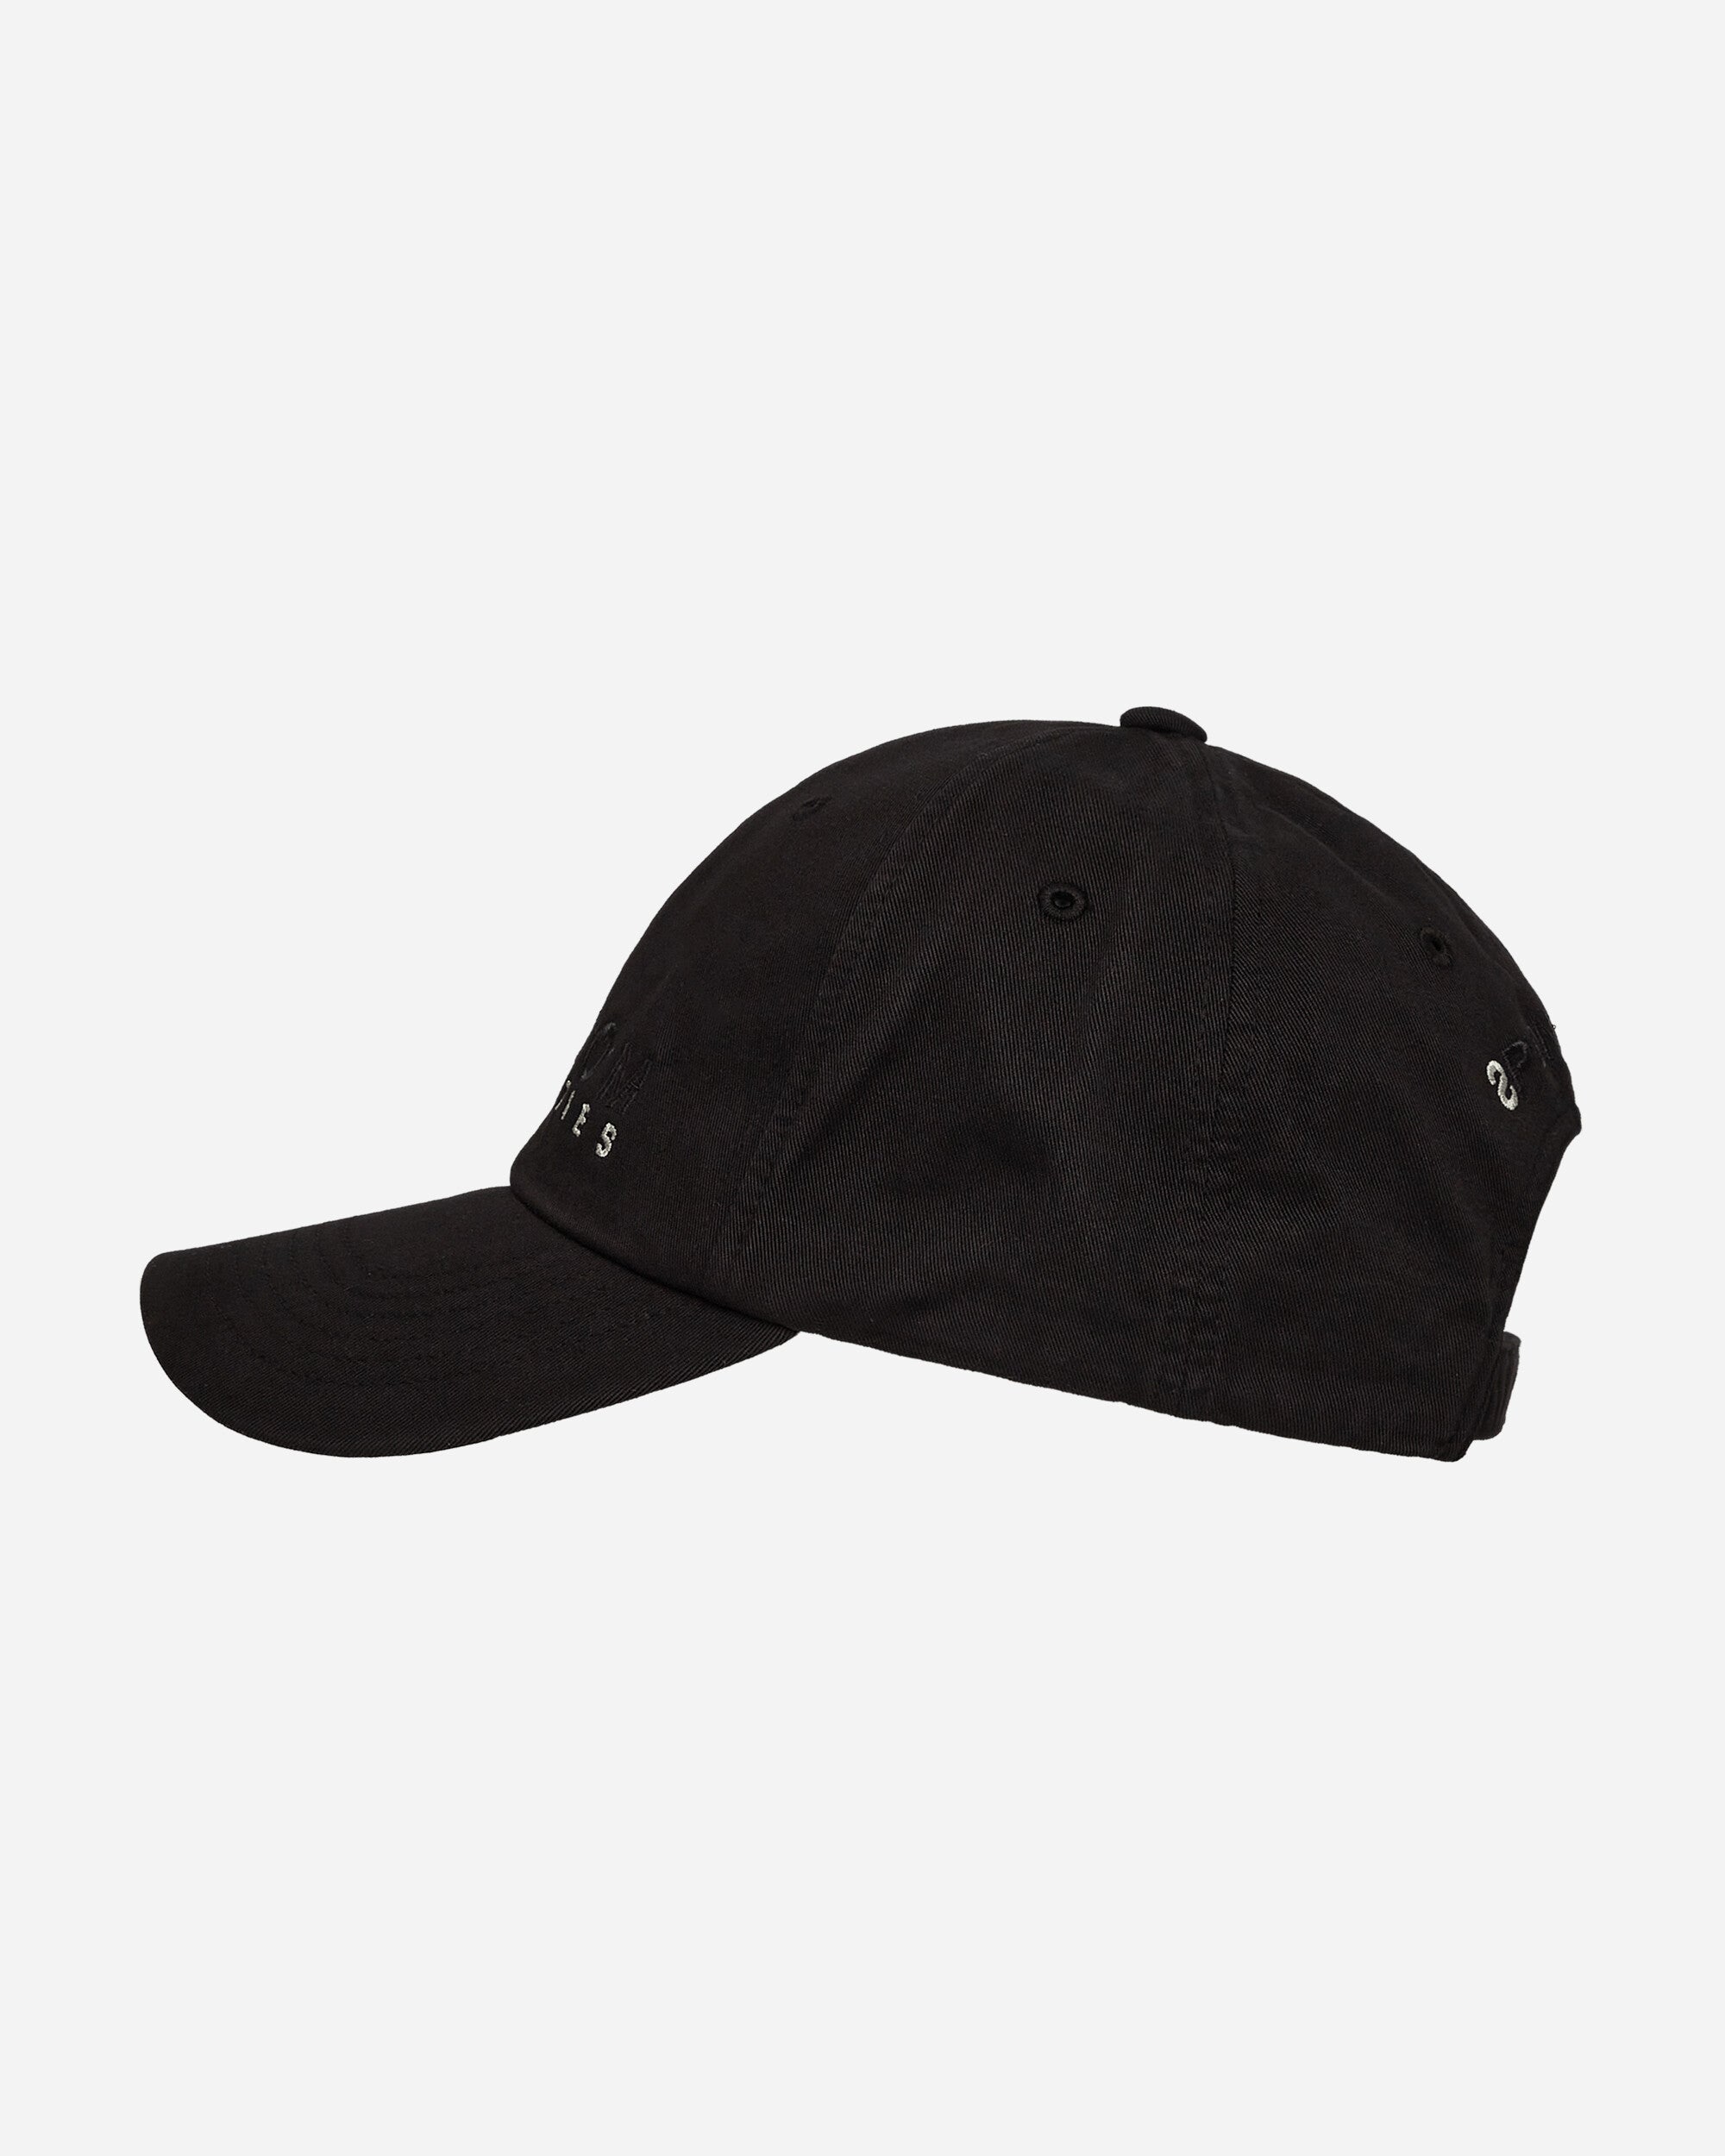 Random Identities Sponsored Baseball Cap Black/Beige Hats Caps RAN03K104  001